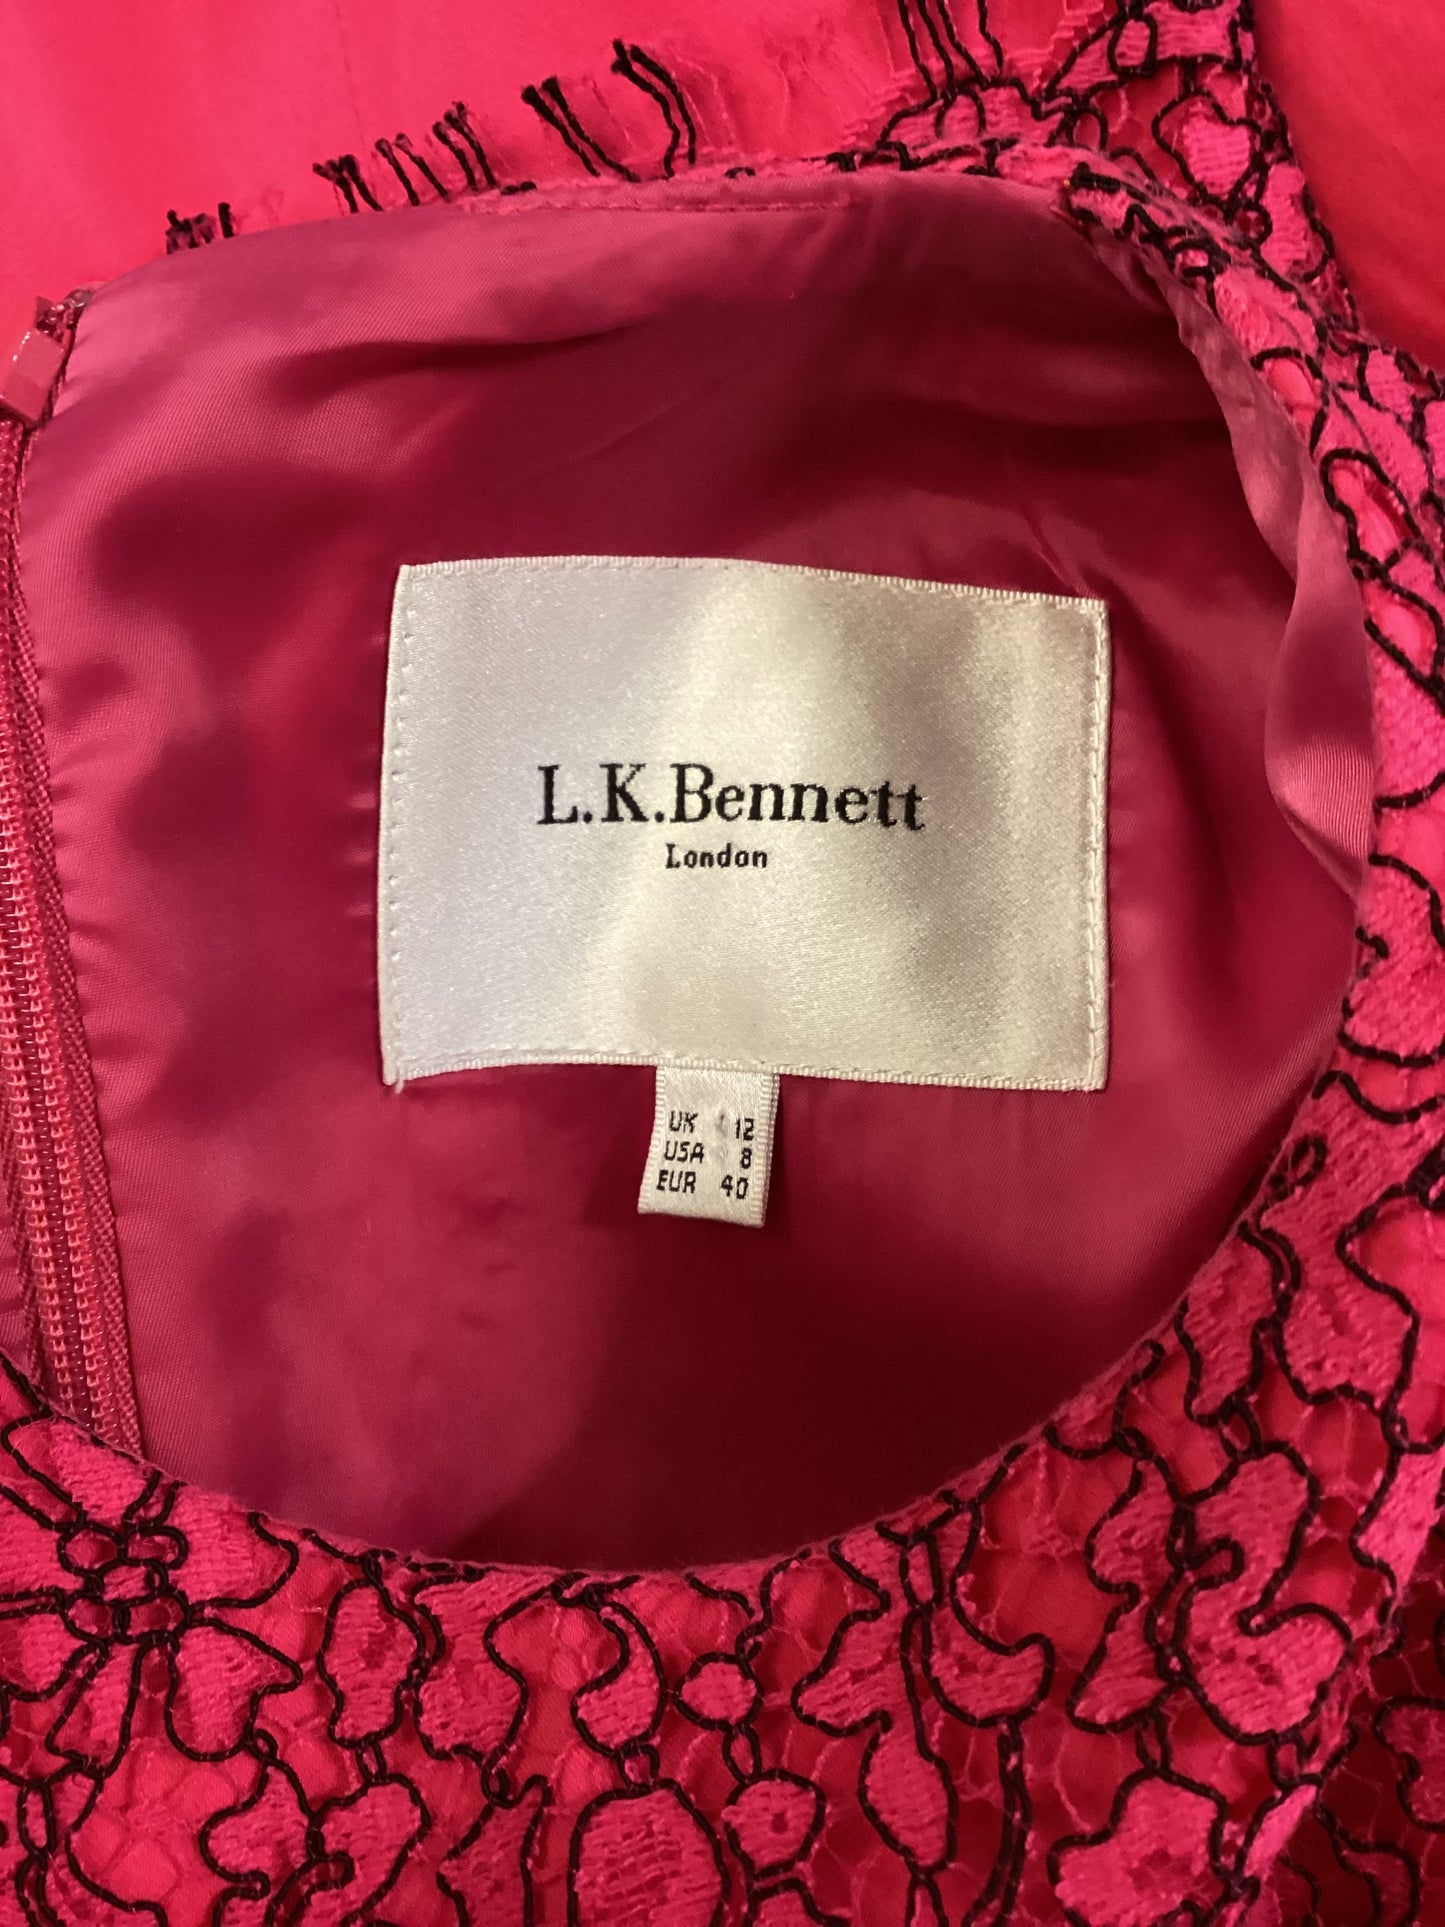 L.K. Bennett Pink Lace Detail Dress Size 12